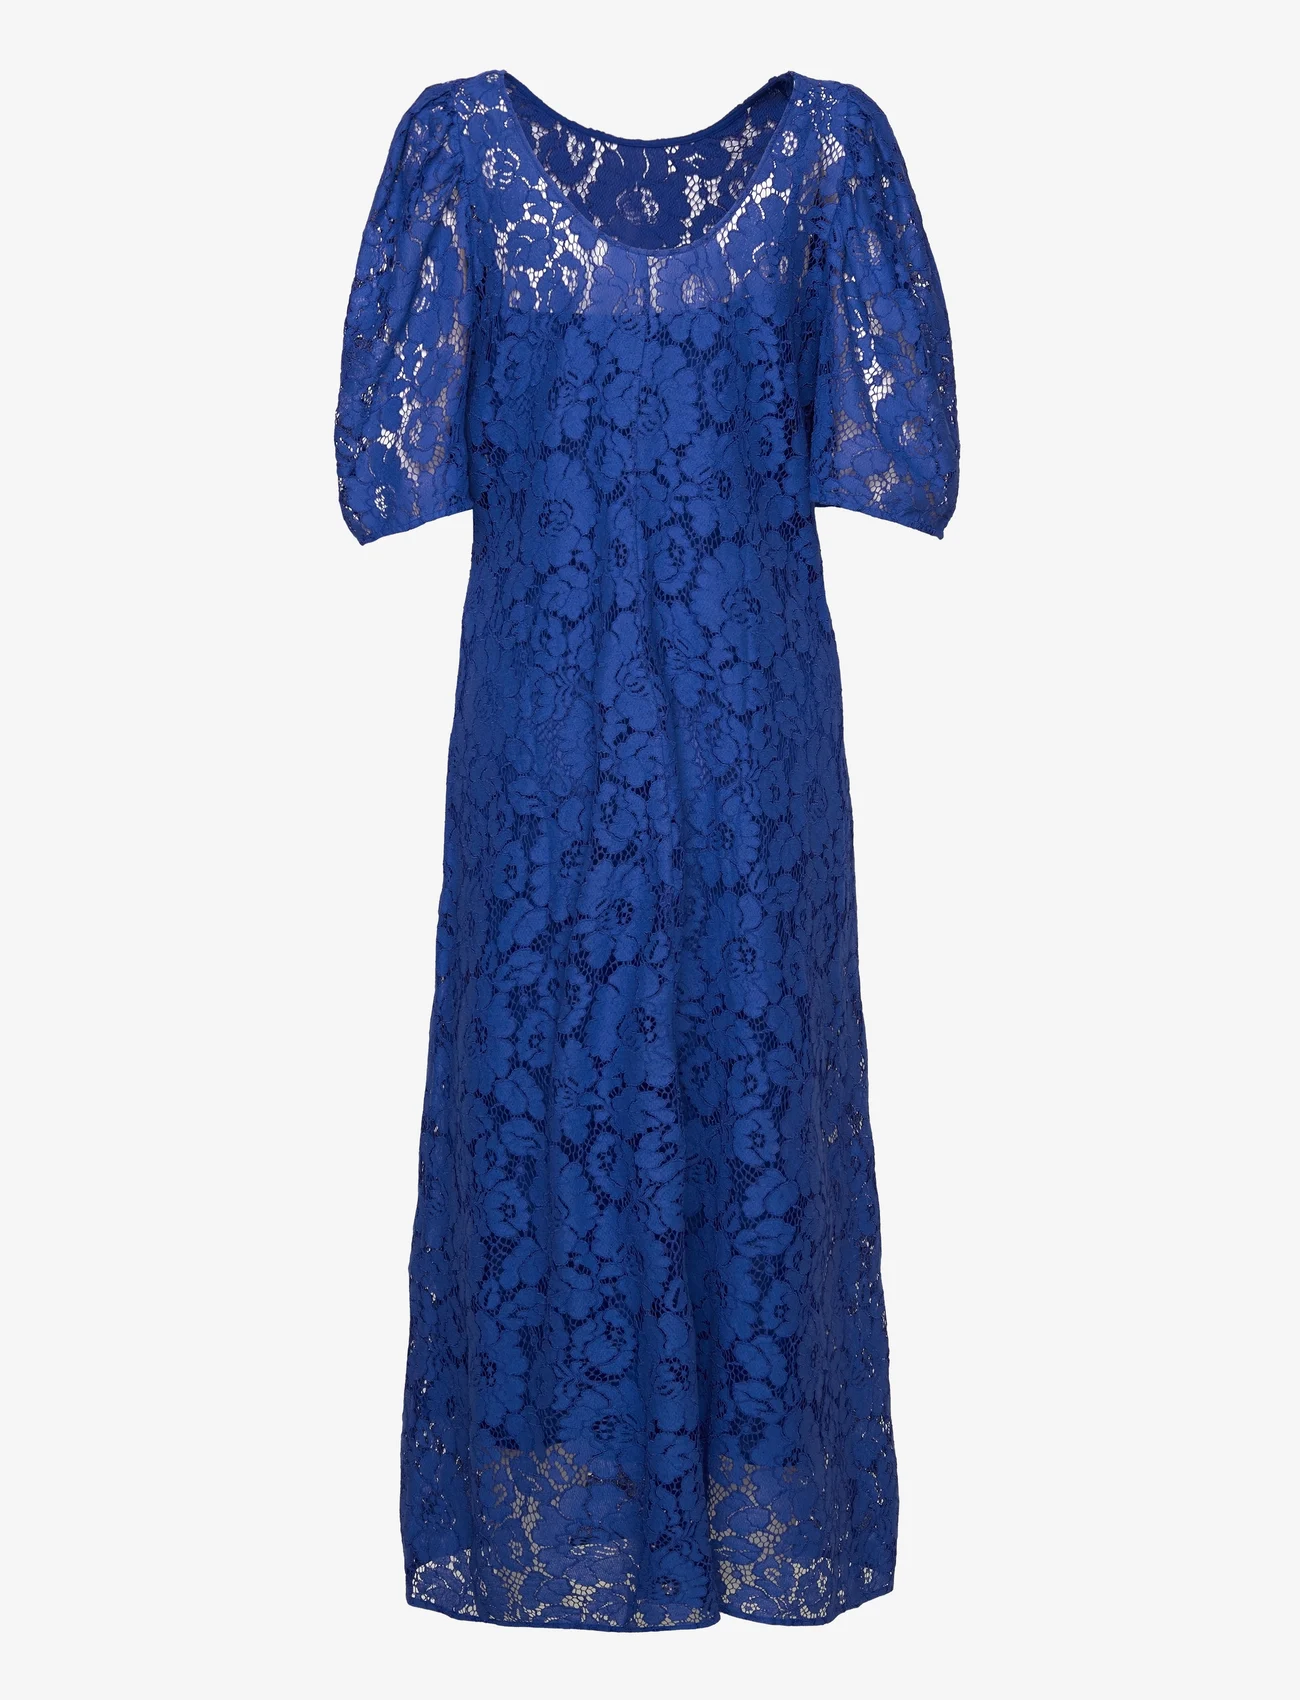 InWear - NabilIW Dress - summer dresses - mazarine blue - 1